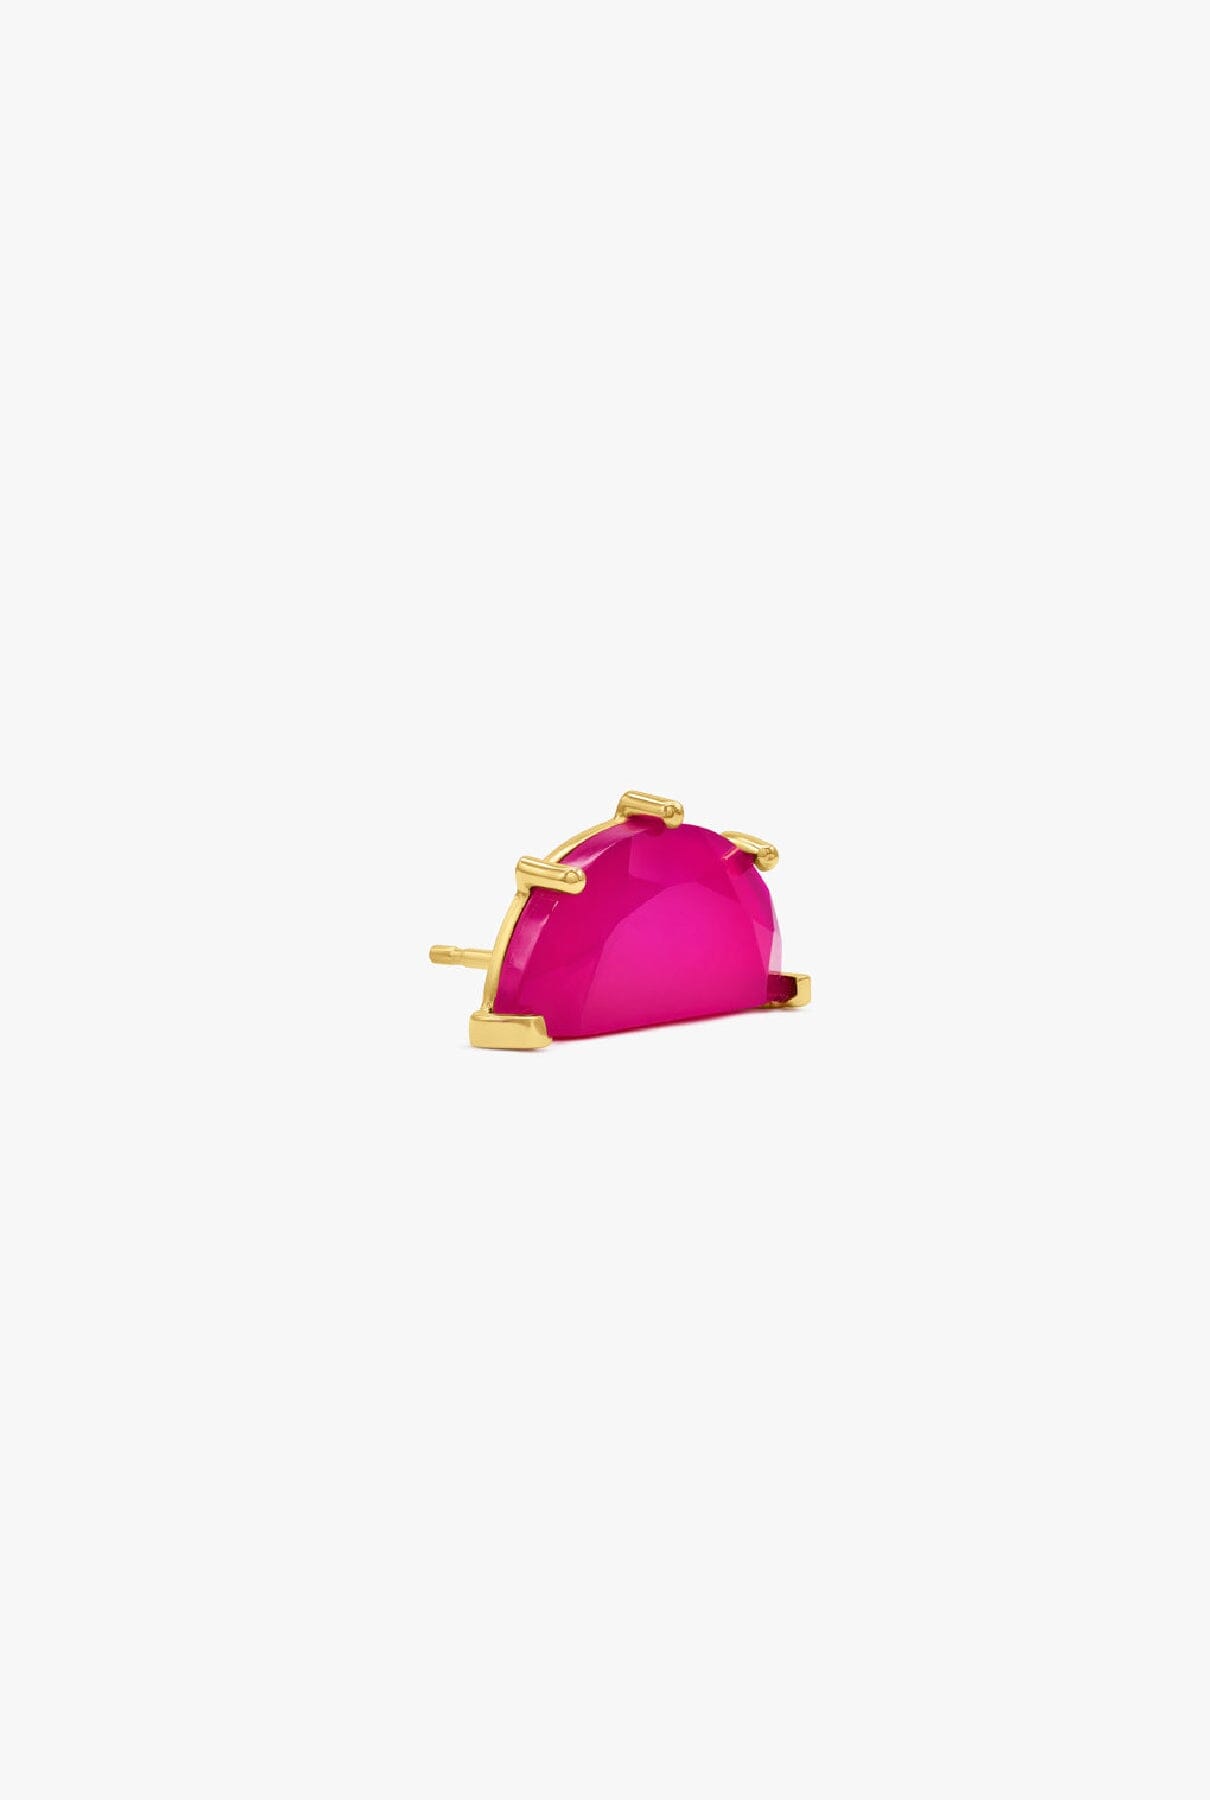 Half Cut Vibrant Large Pink Chalcedony Earring Earring Suot Studio 